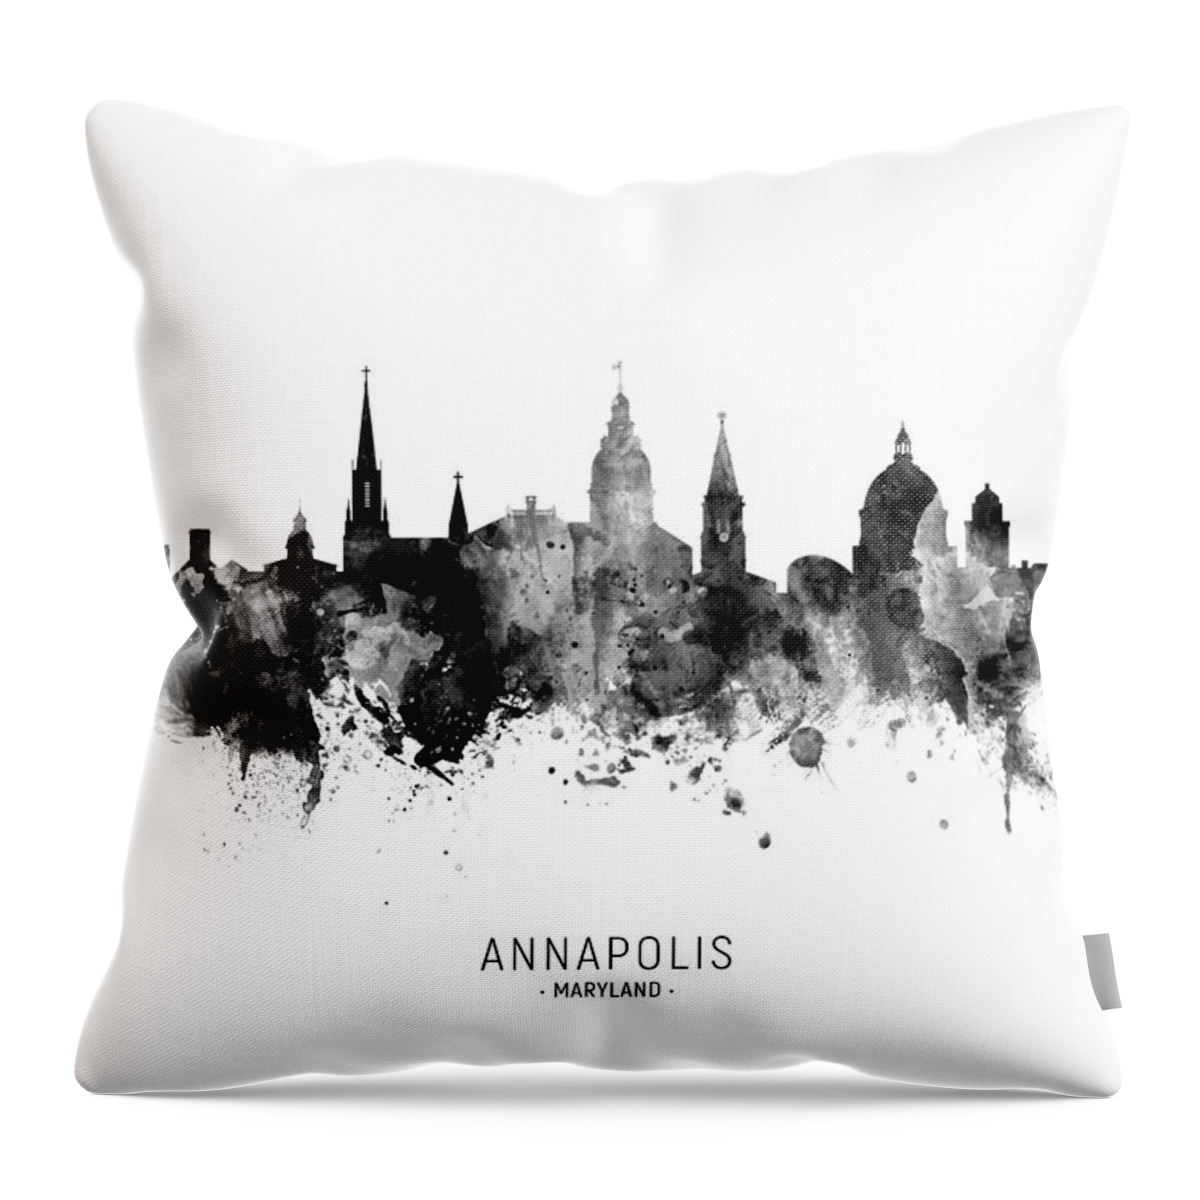 Annapolis Throw Pillow featuring the digital art Annapolis Maryland Skyline by Michael Tompsett